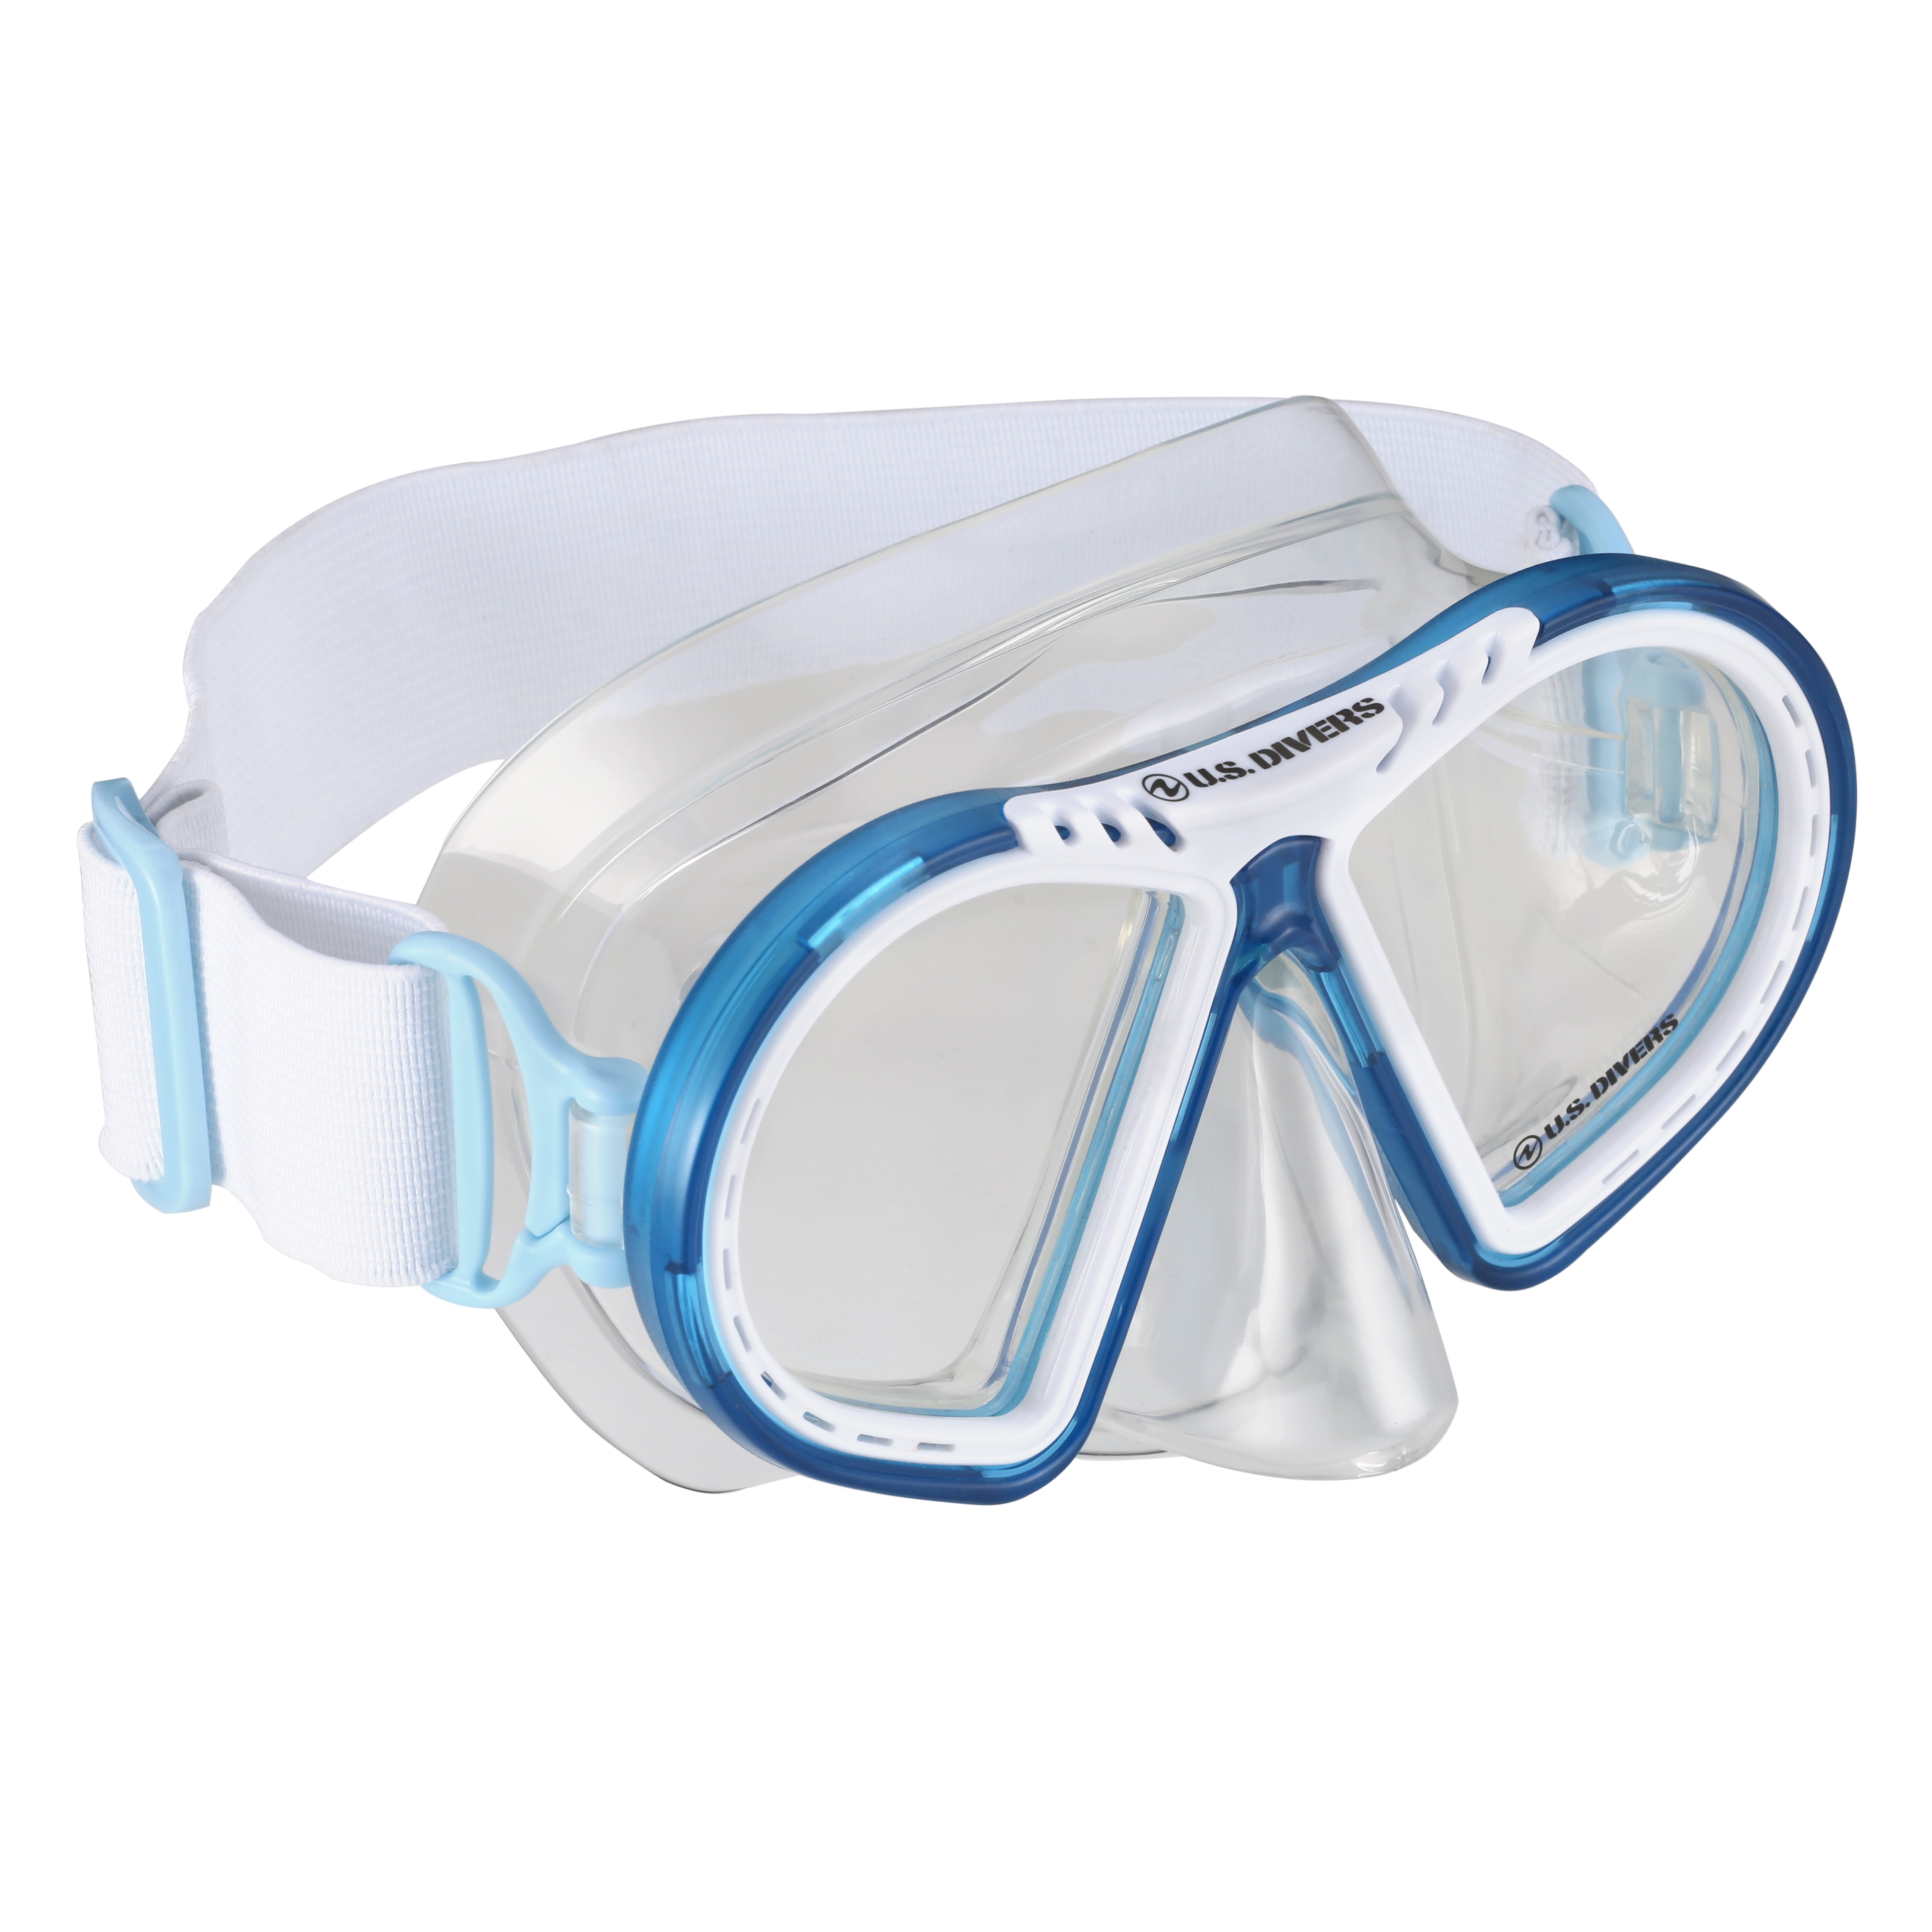 Divers Snorkel Set Blue JUNIOR 6 KIDS Large/XL size 1-4 Play Series Details about   *NEW* U.S 